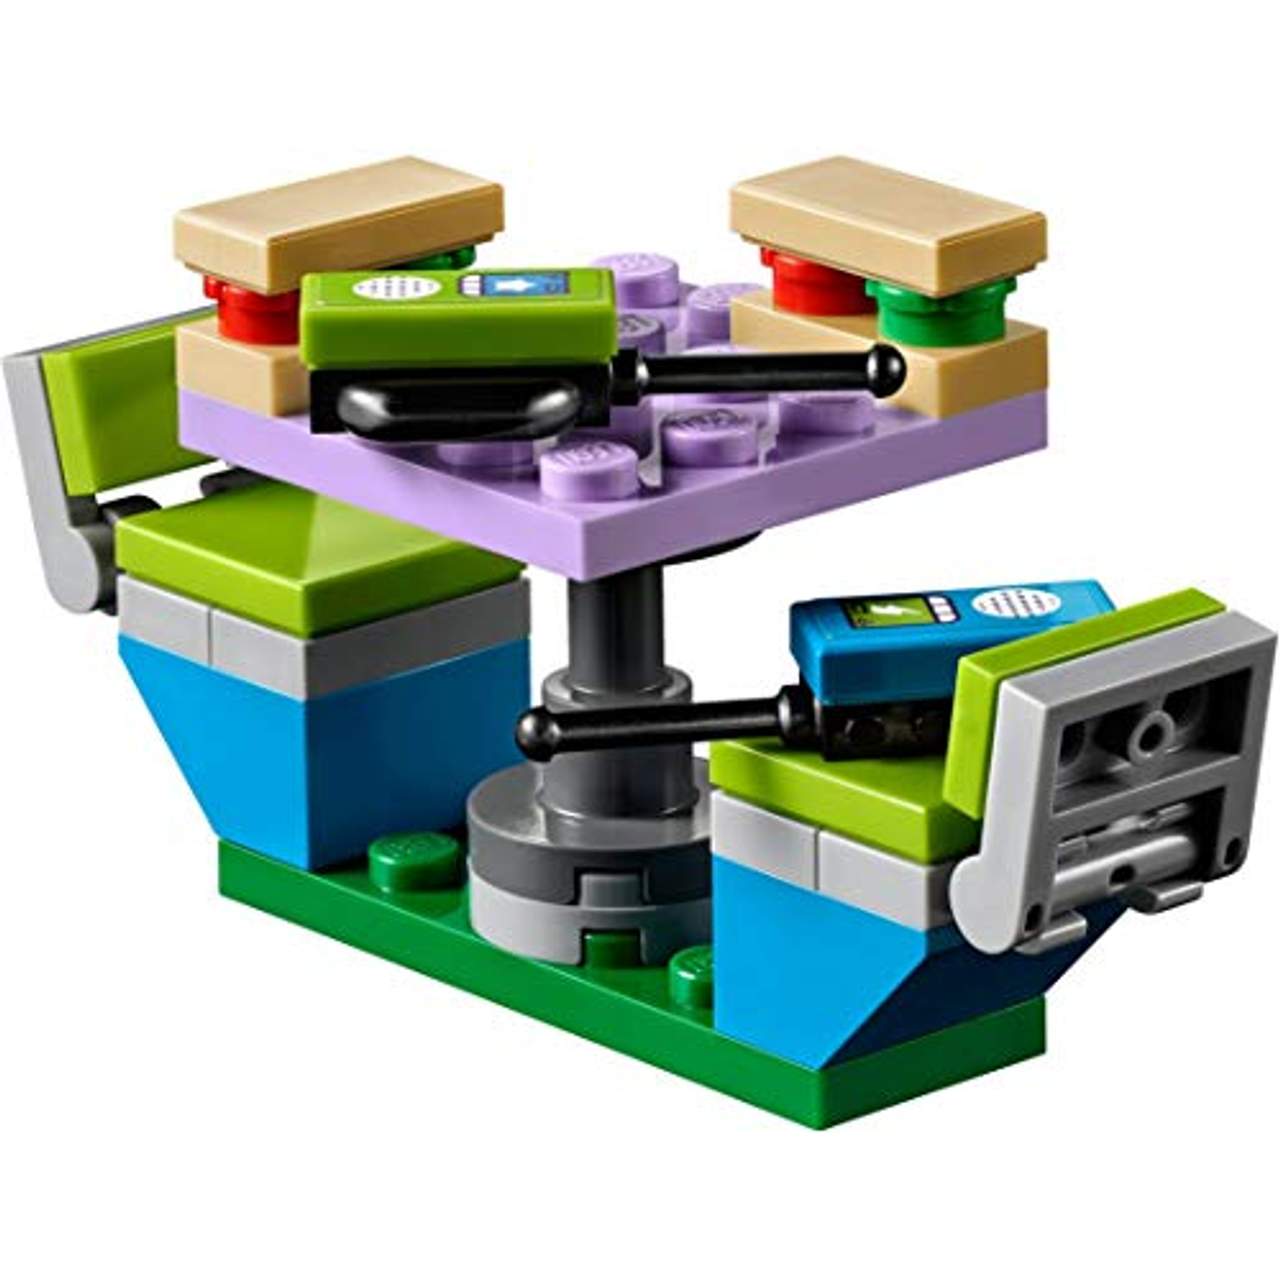 LEGO Friends 41339 Mias Wohnmobil Cooles Kinderspielzeug